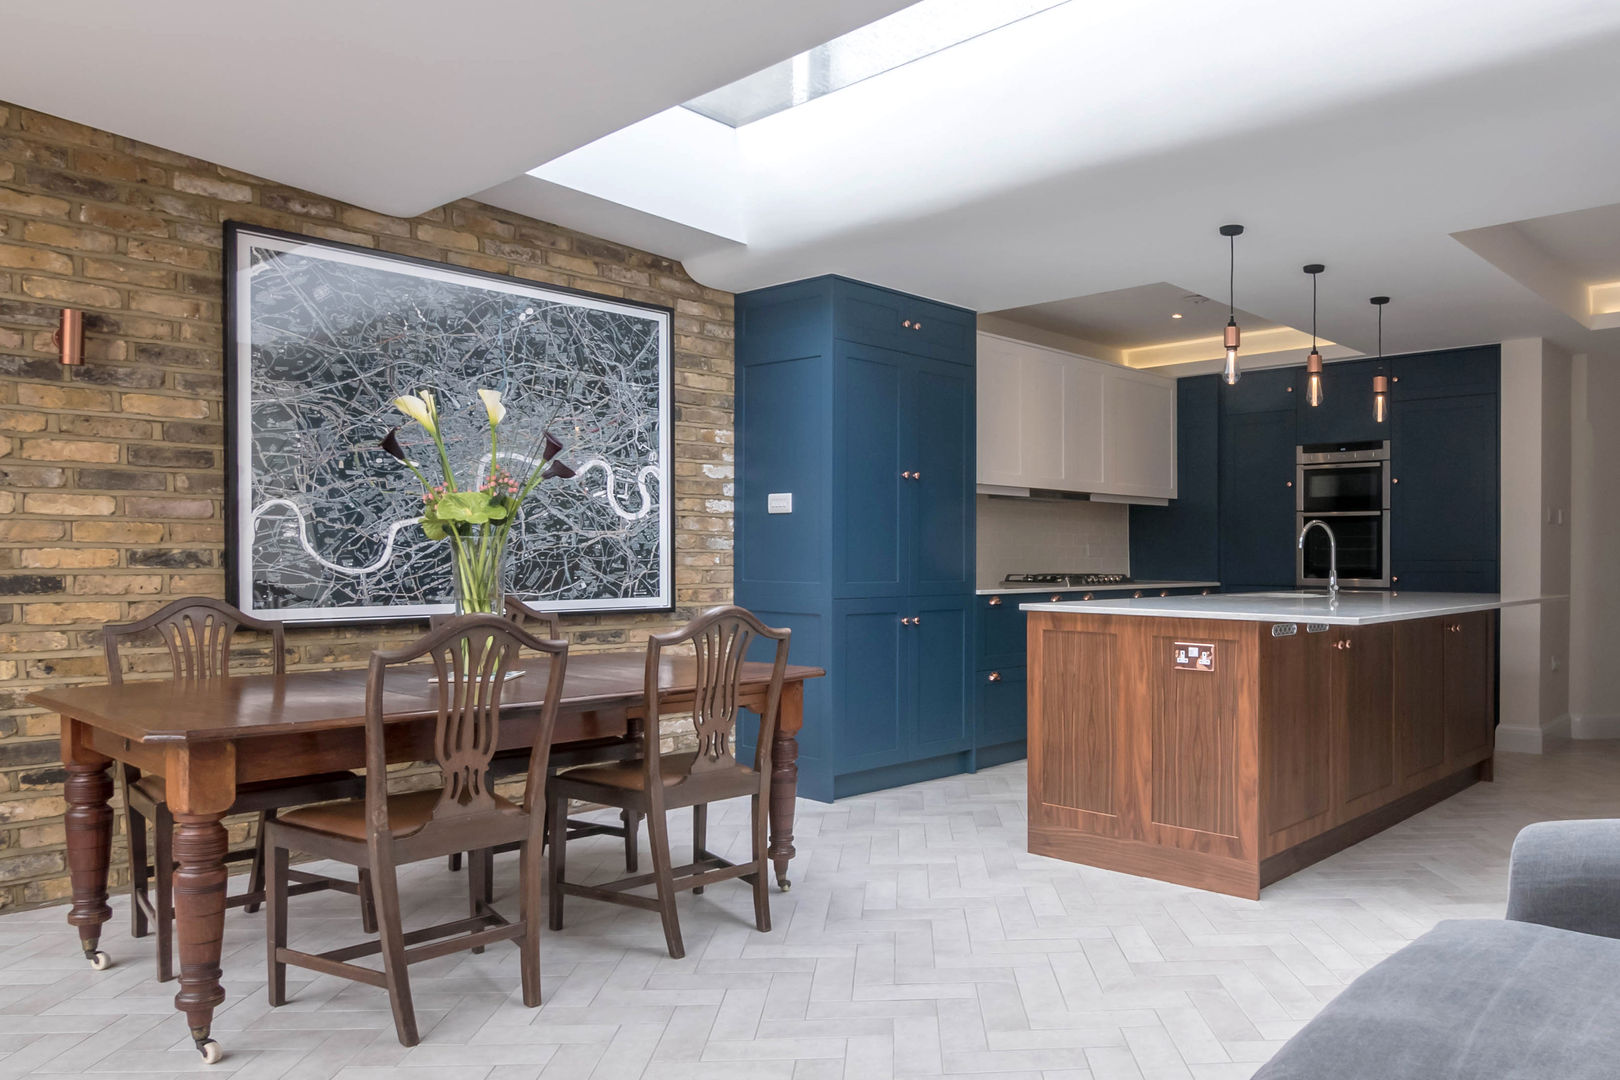 East Dulwich 1 Proctor & Co. Architecture Ltd مطبخ بلاط blue kitchen,modern kitchen,london kitchen,shaker style,exposed brick,curved ceiling,walnut,herringbone,skylight,east dulwich